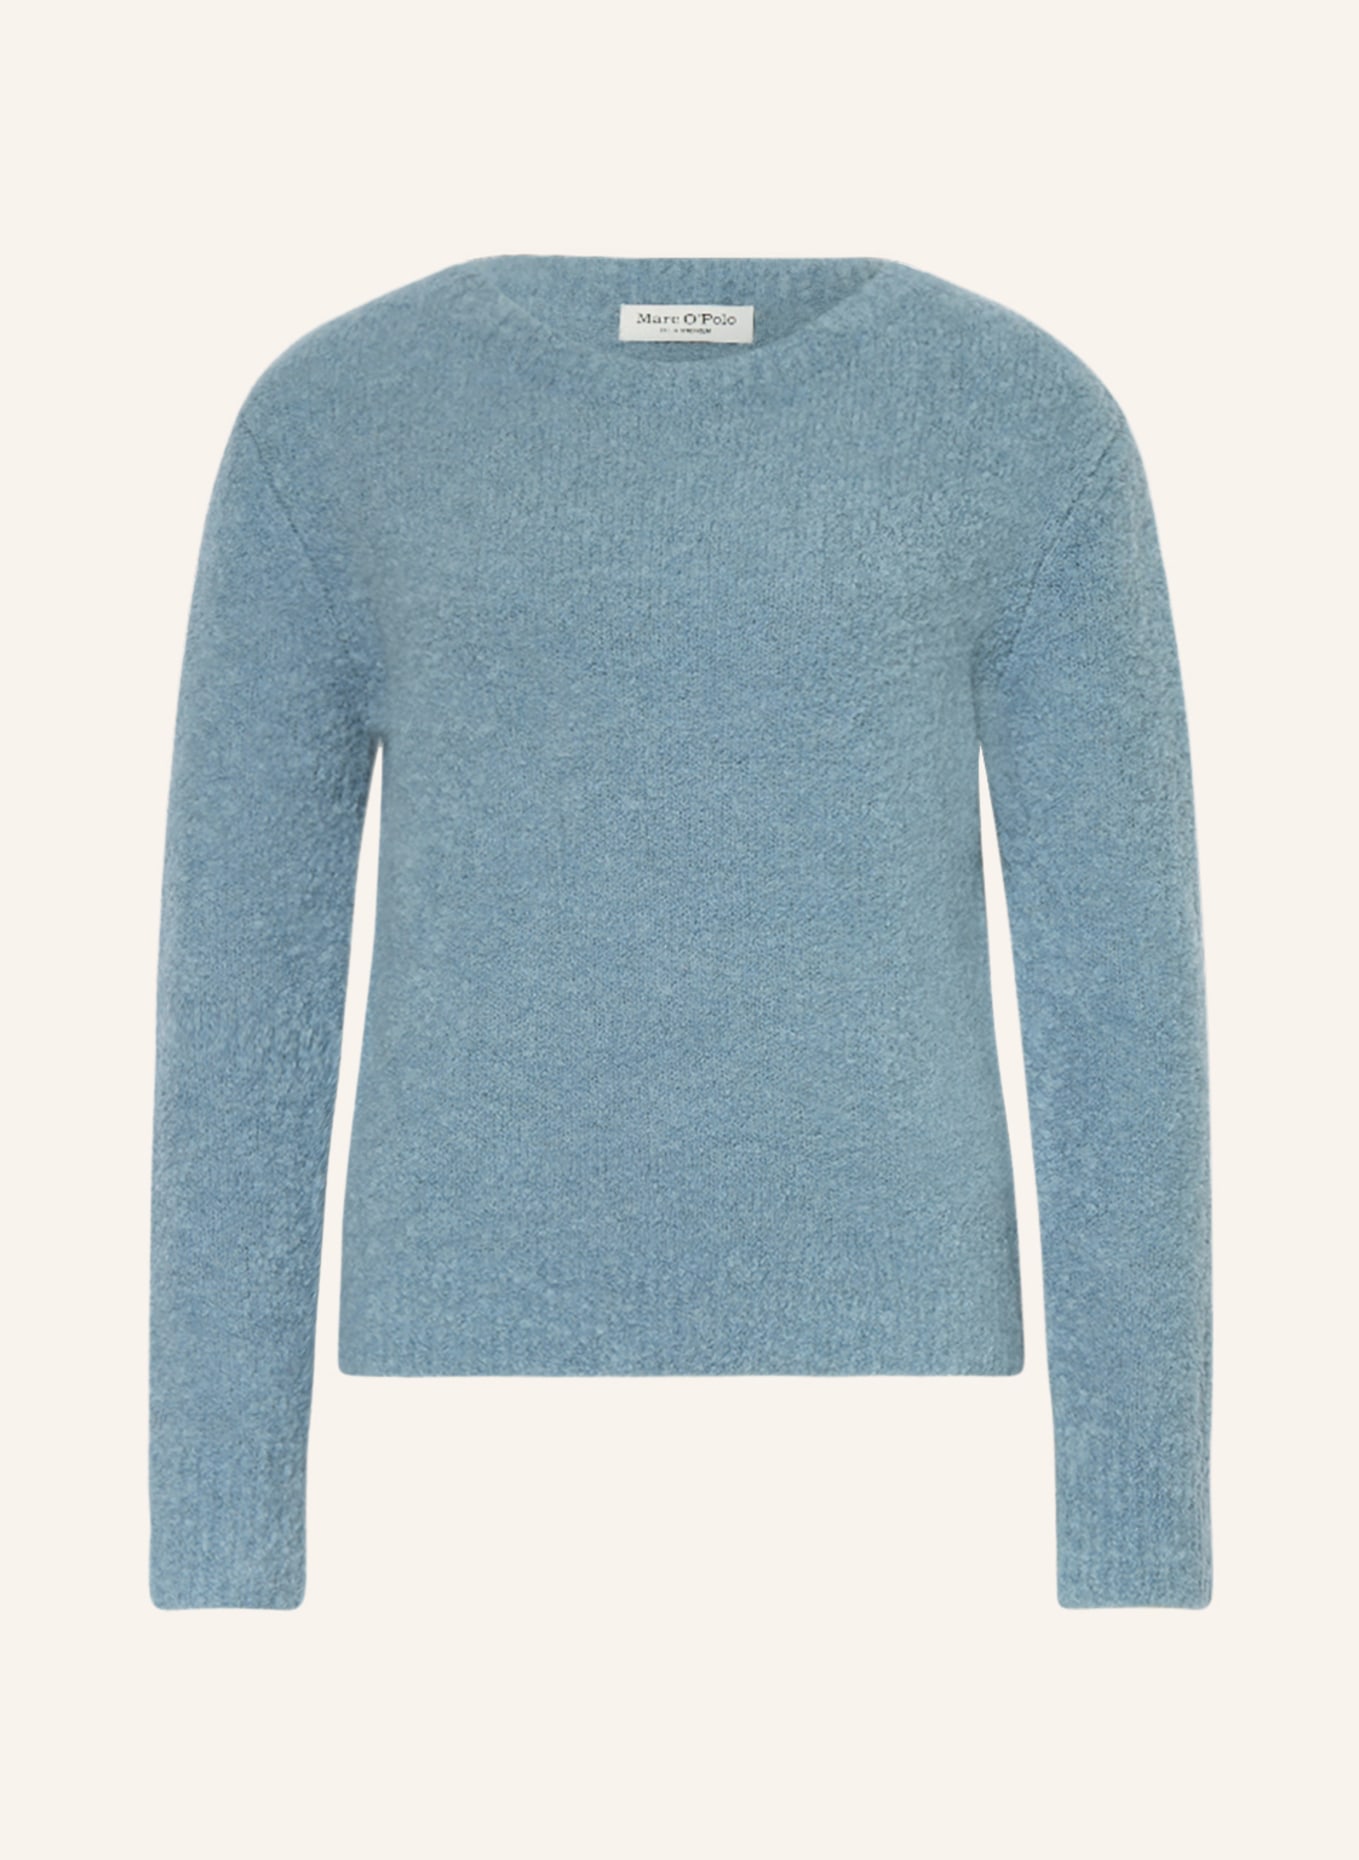 Marc O'Polo Sweater, Color: LIGHT BLUE (Image 1)